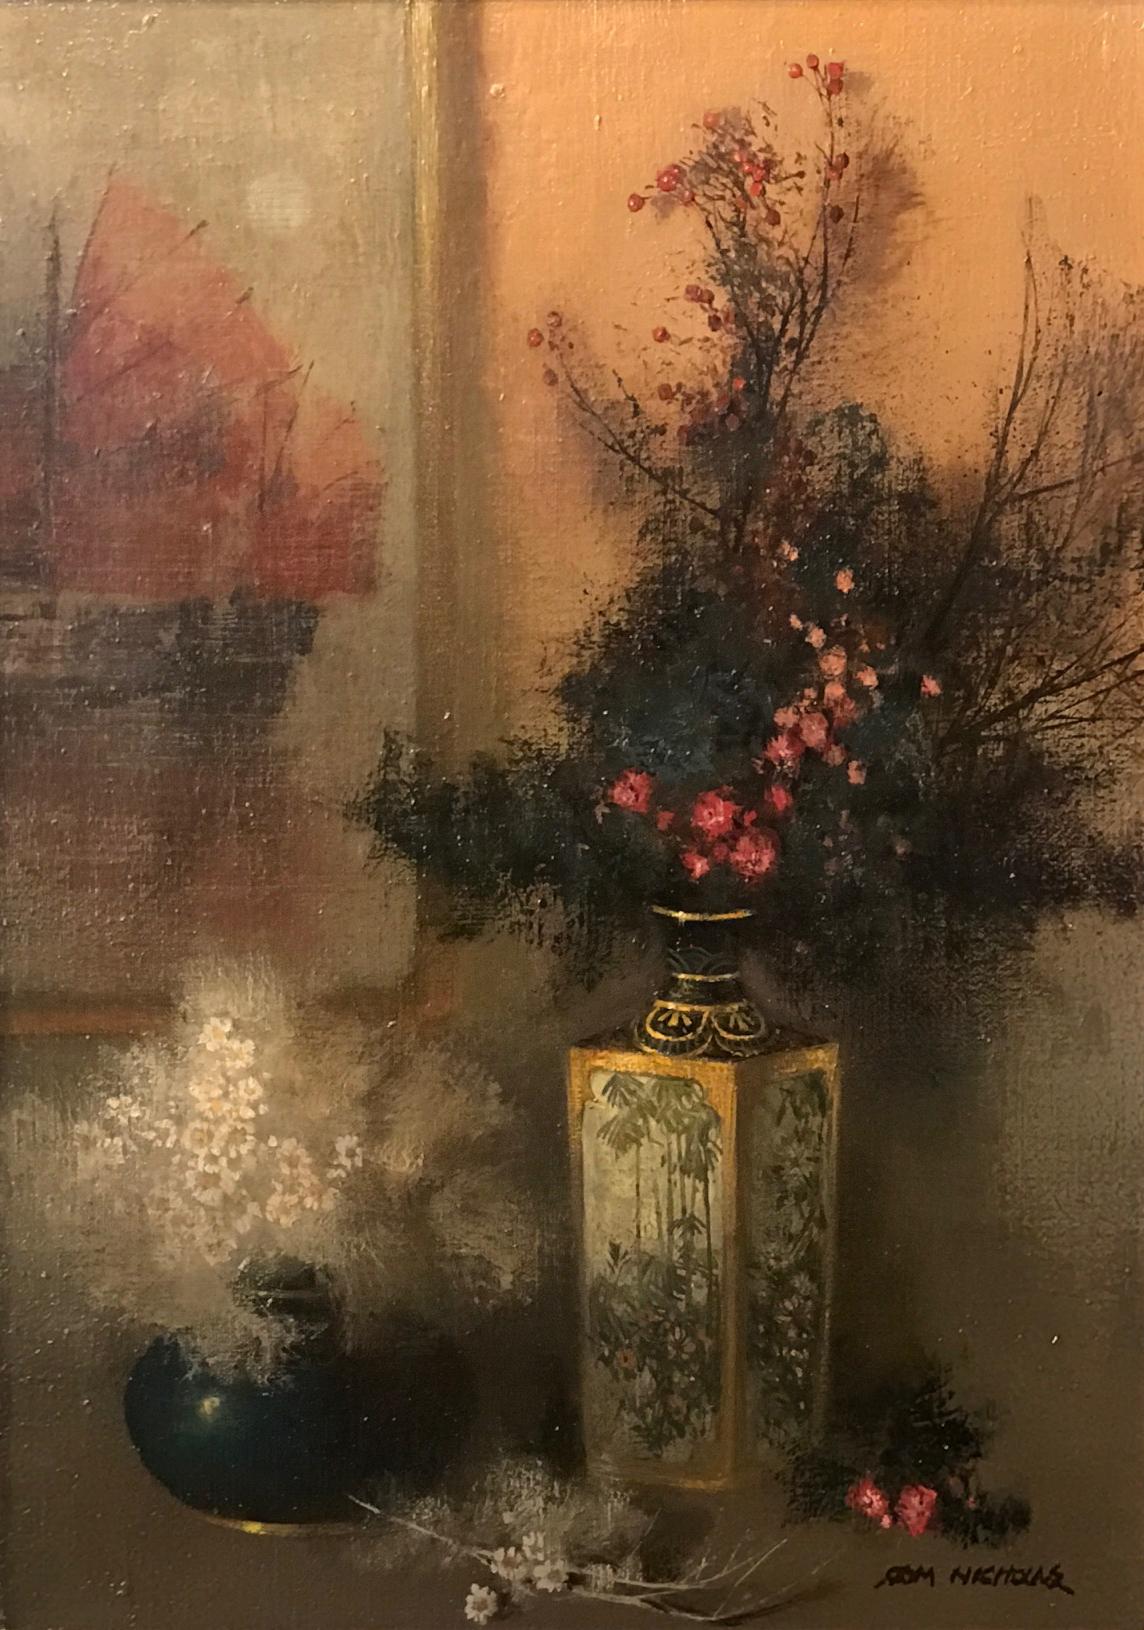 Satsumi & Dried Flowers - Painting by Tom Nicholas